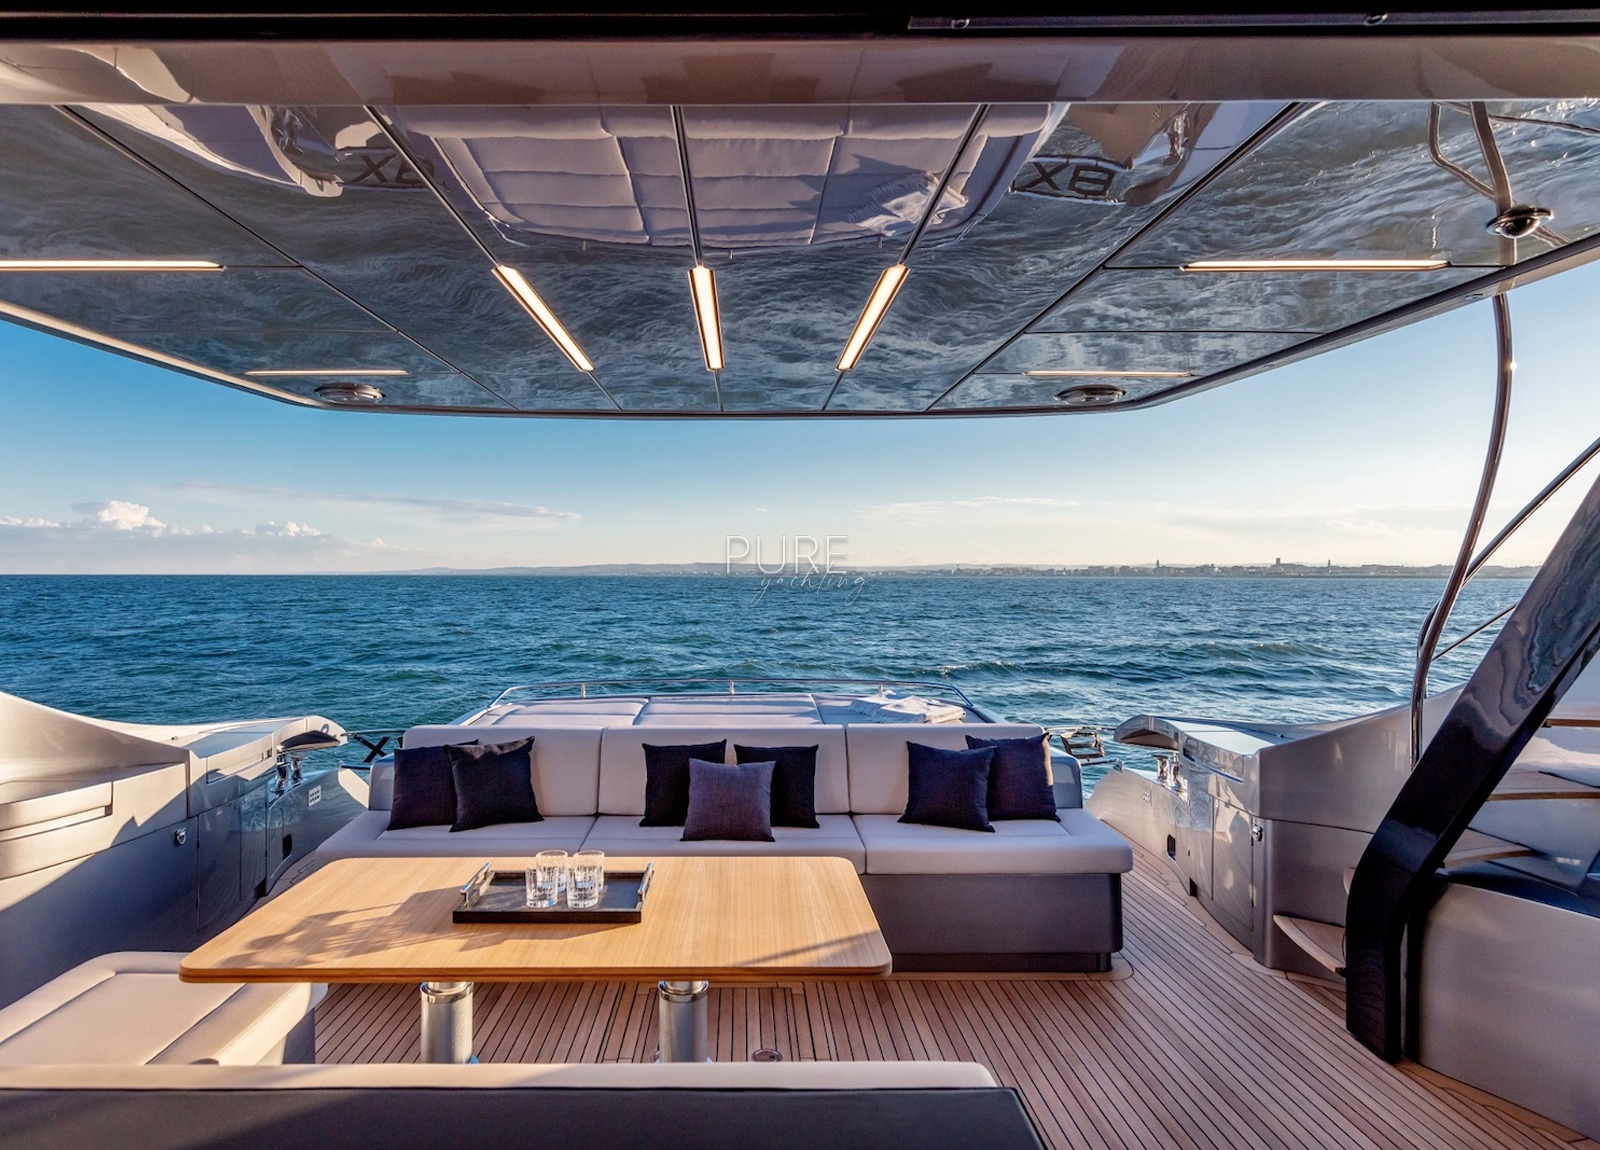 oberdeck sitzgruppe luxusyacht pershing 8x beyond balearic islands